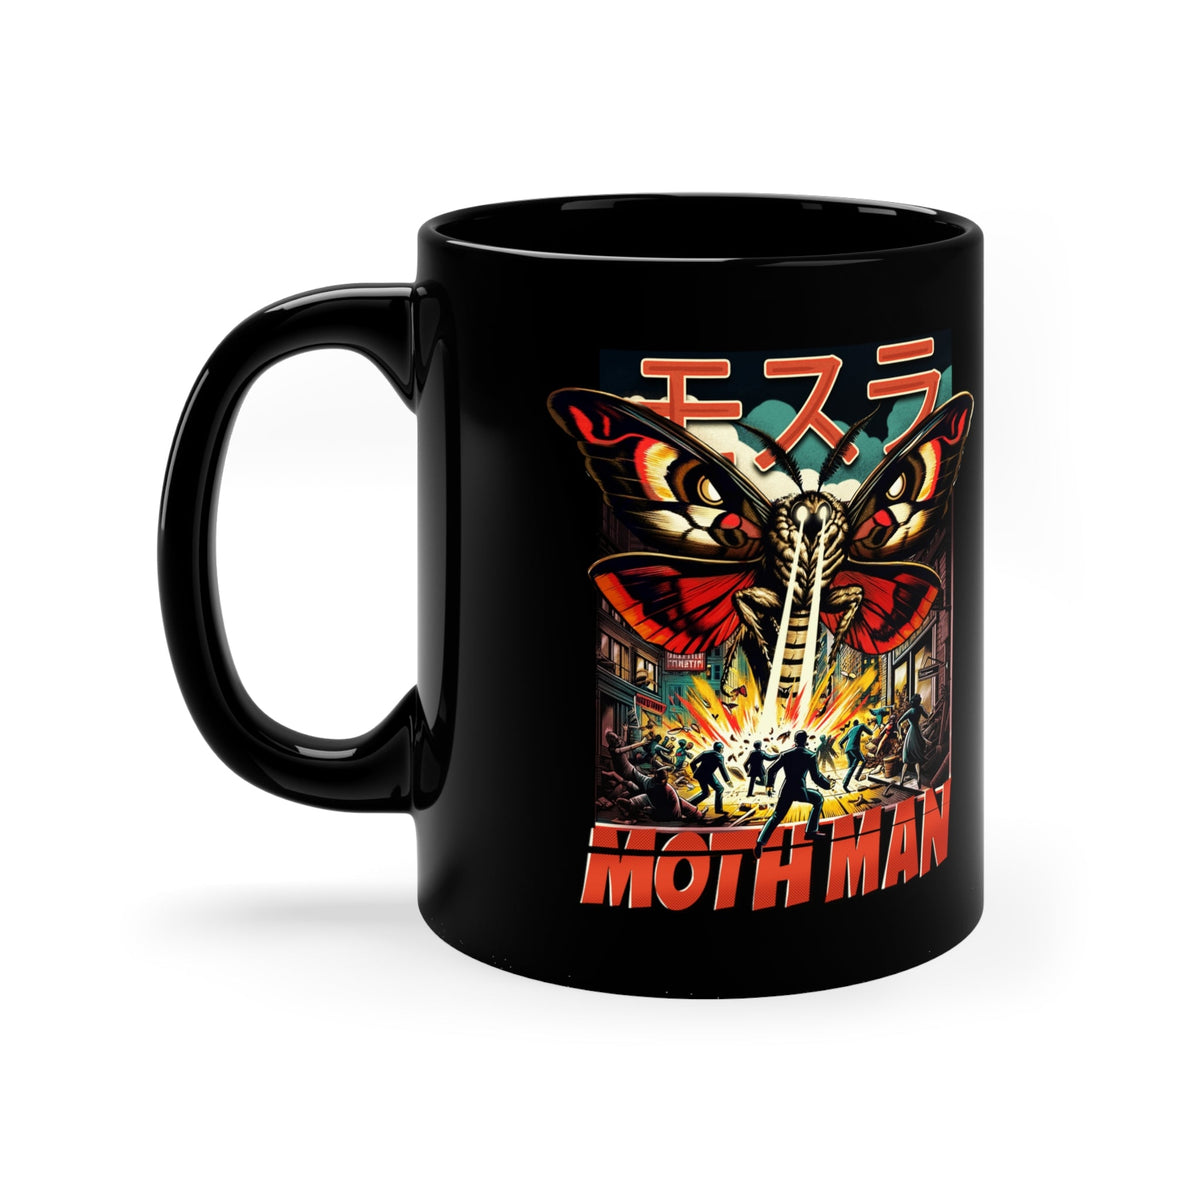 Mothman Attack Comic Book Coffee Mug - 11 oz - Goth Cloth Co.Mug10031784744474127112